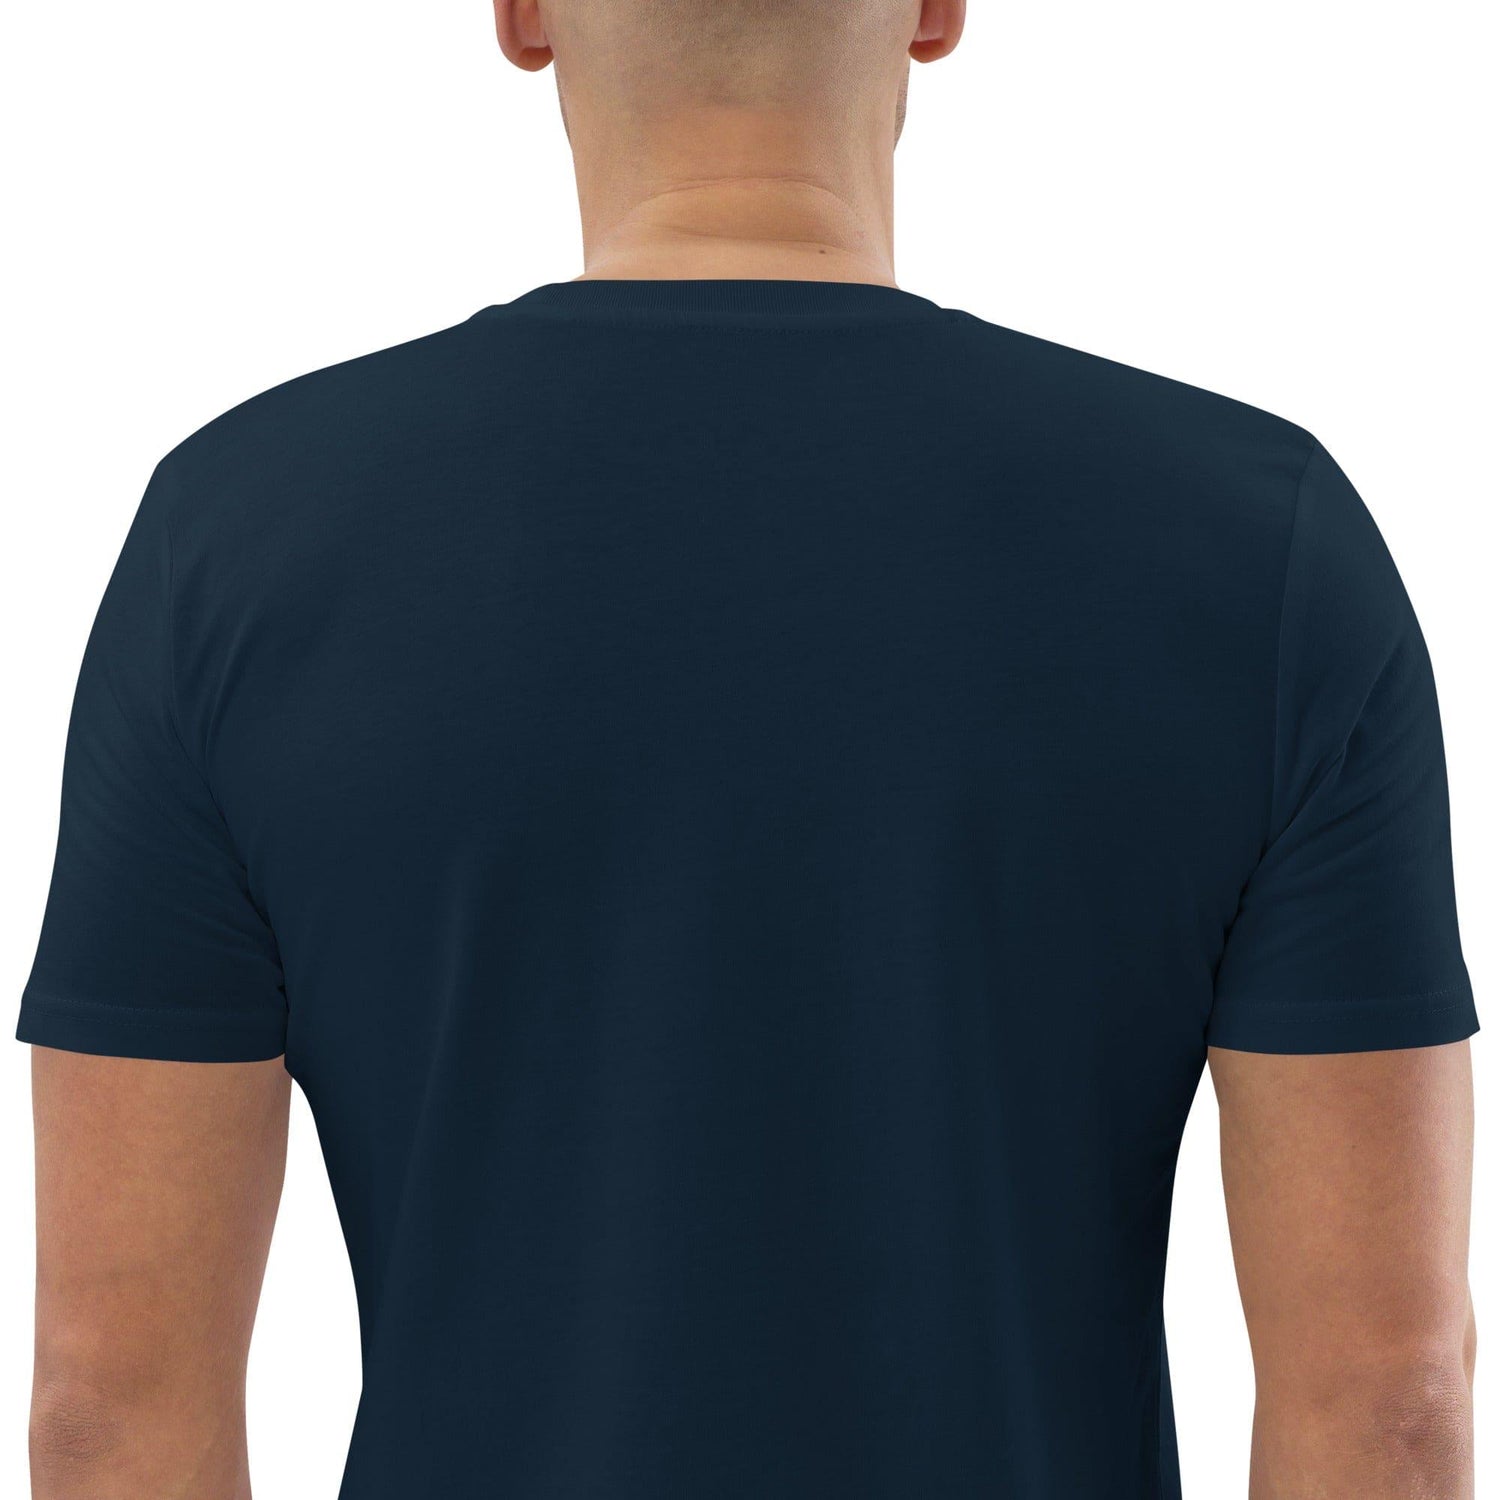 Herren T-Shirts S-5XL - Preis: € 28.79 - BUYATHOME24 Germany